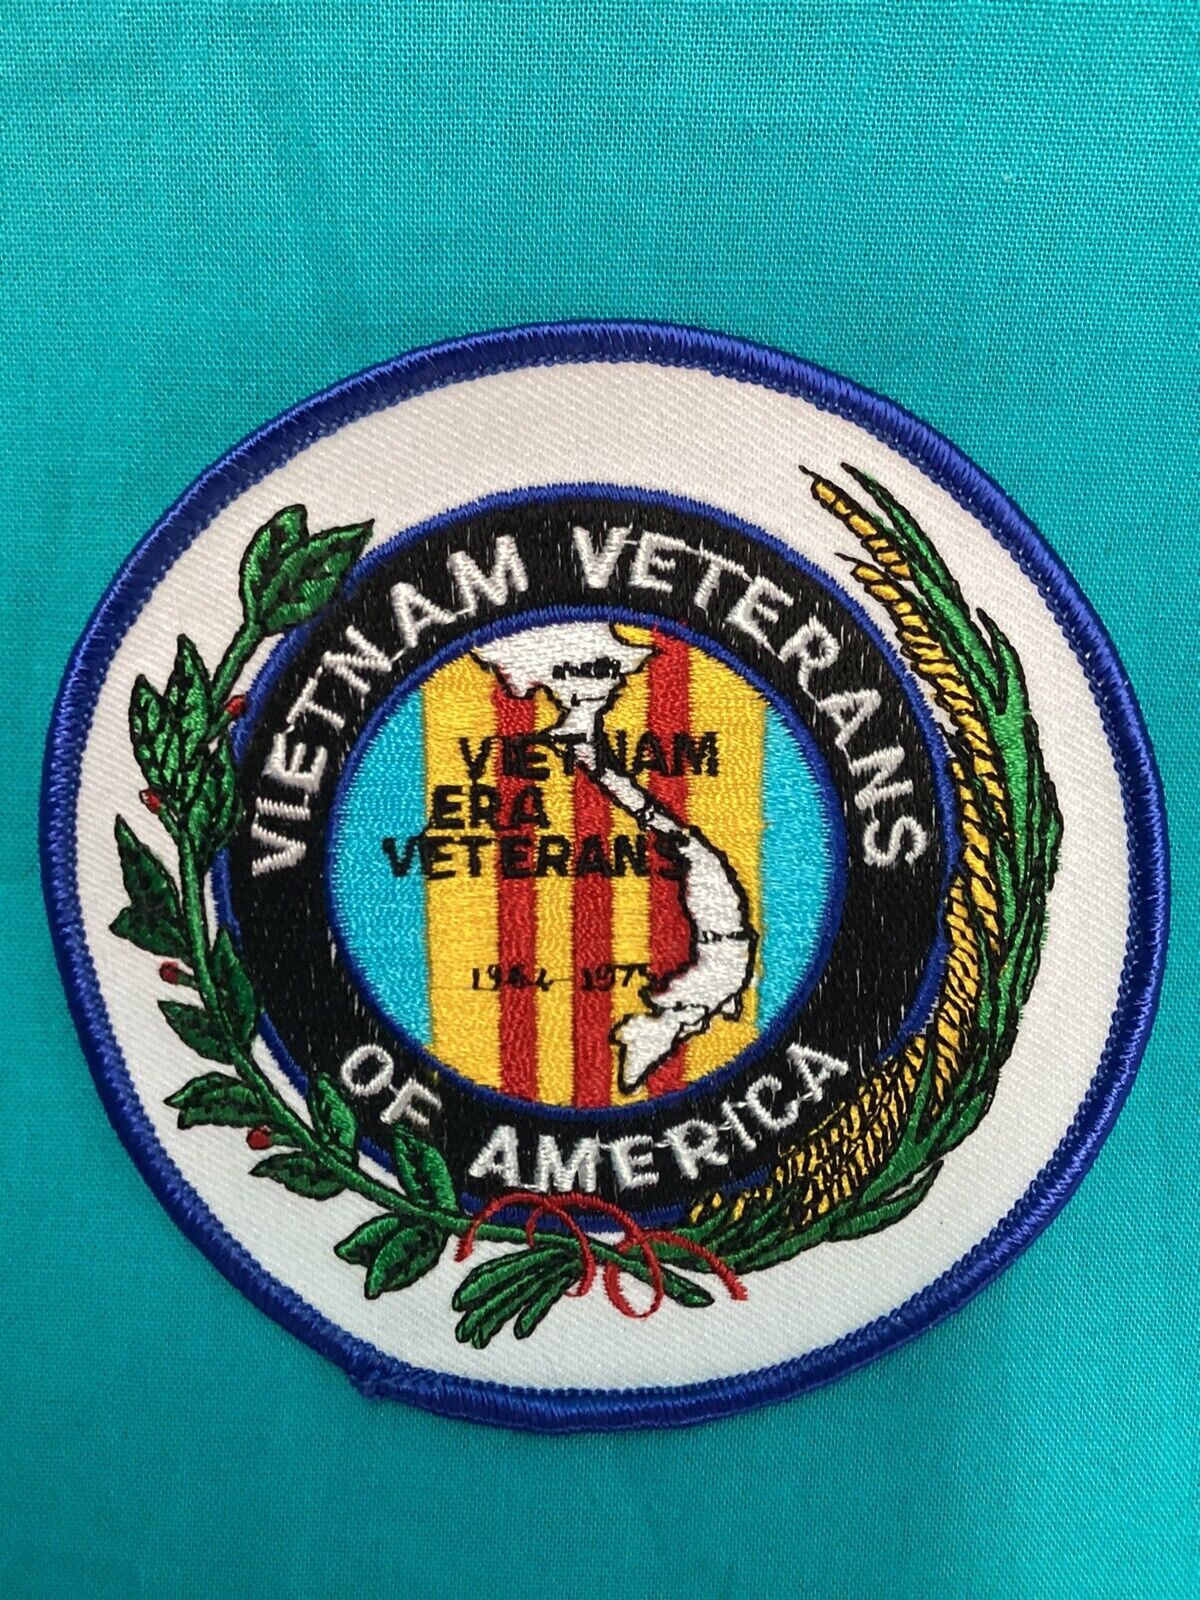 Vietnam Era Veterans Of America Patch